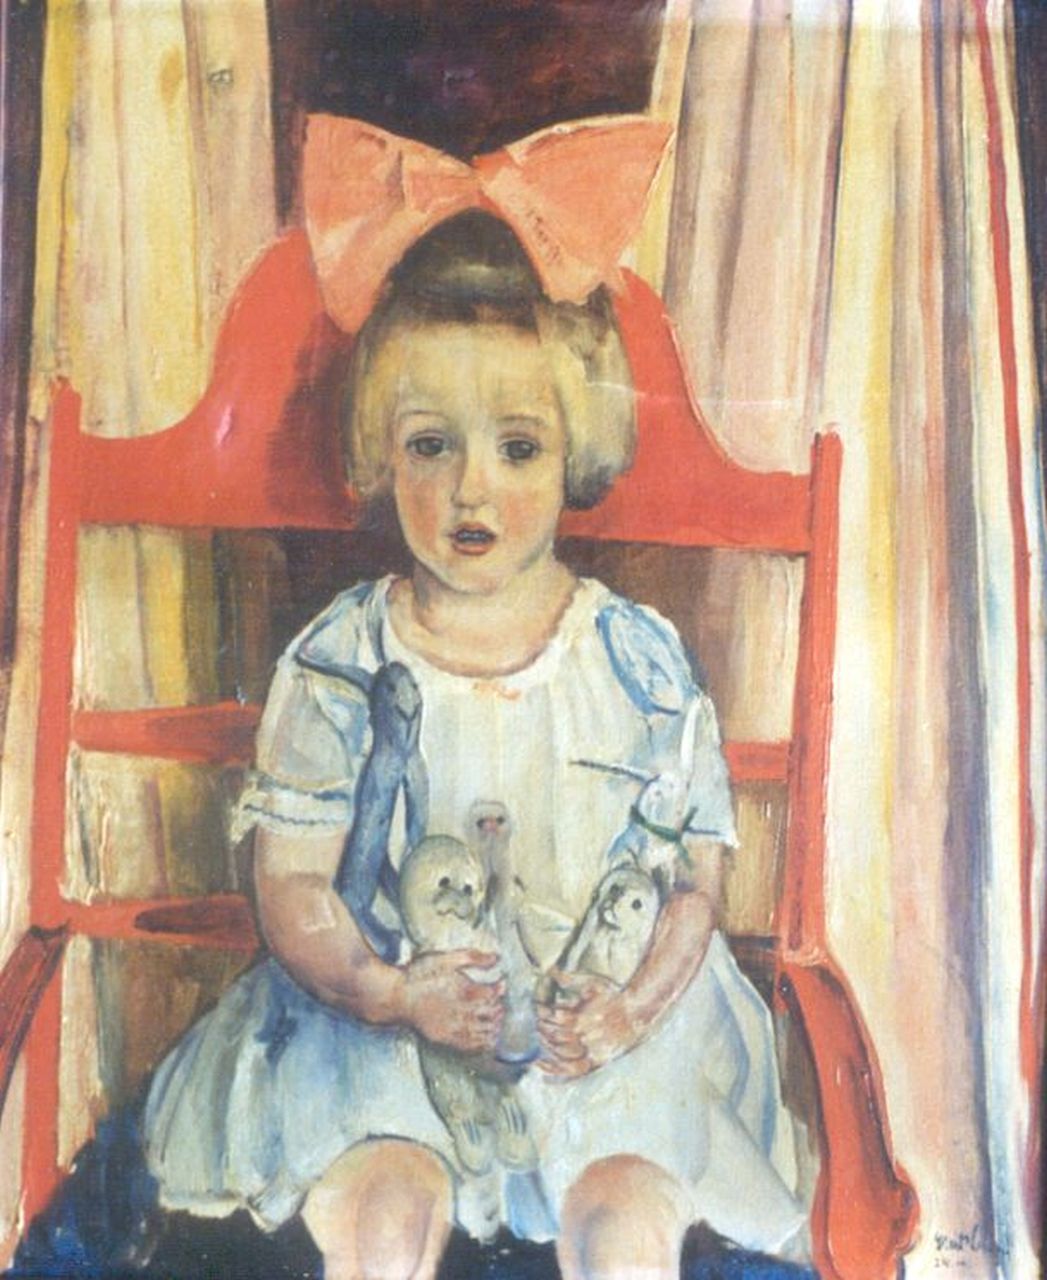 Leyden O.M.E.  | Oskar Moritz 'Ernst' Leyden, Meisje met strik, olieverf op doek 73,0 x 60,0 cm, gesigneerd rechtsonder en gedateerd '24